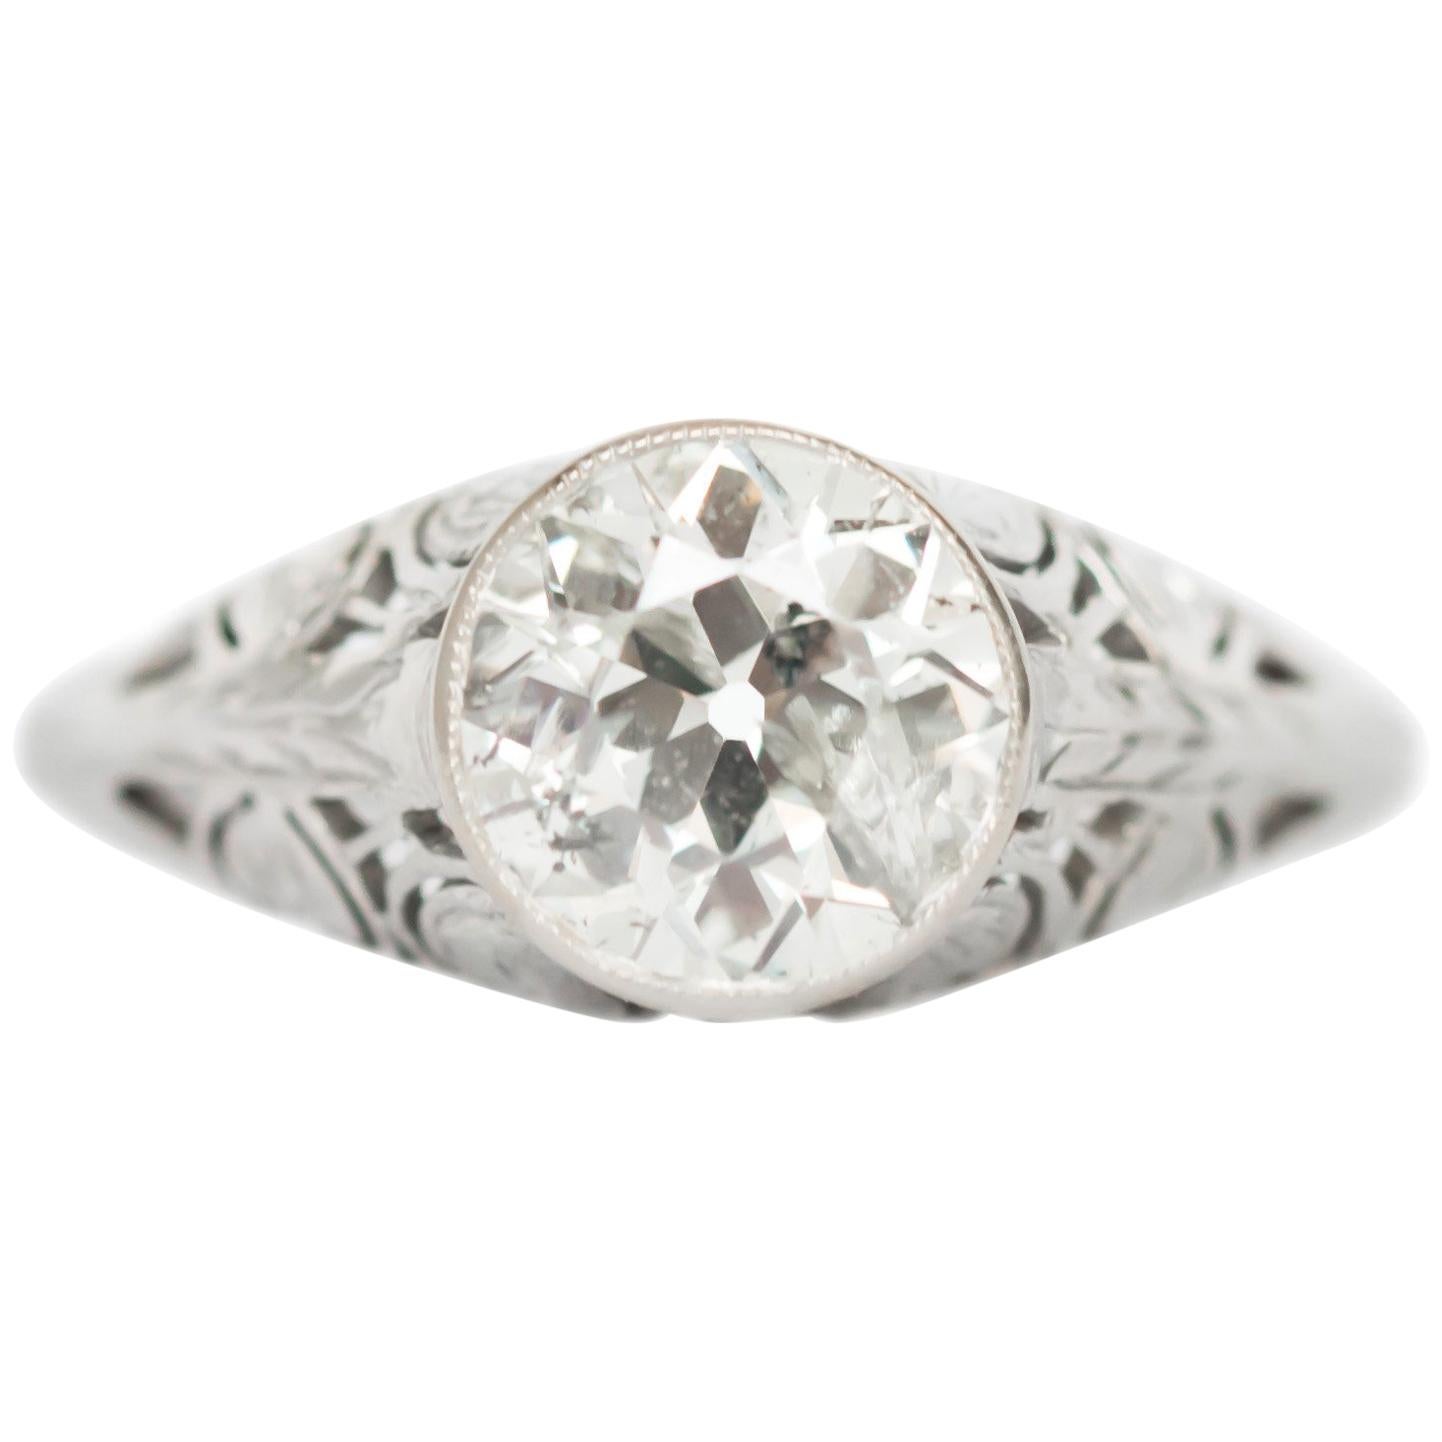 1.58 Carat Diamond Engagement Ring For Sale